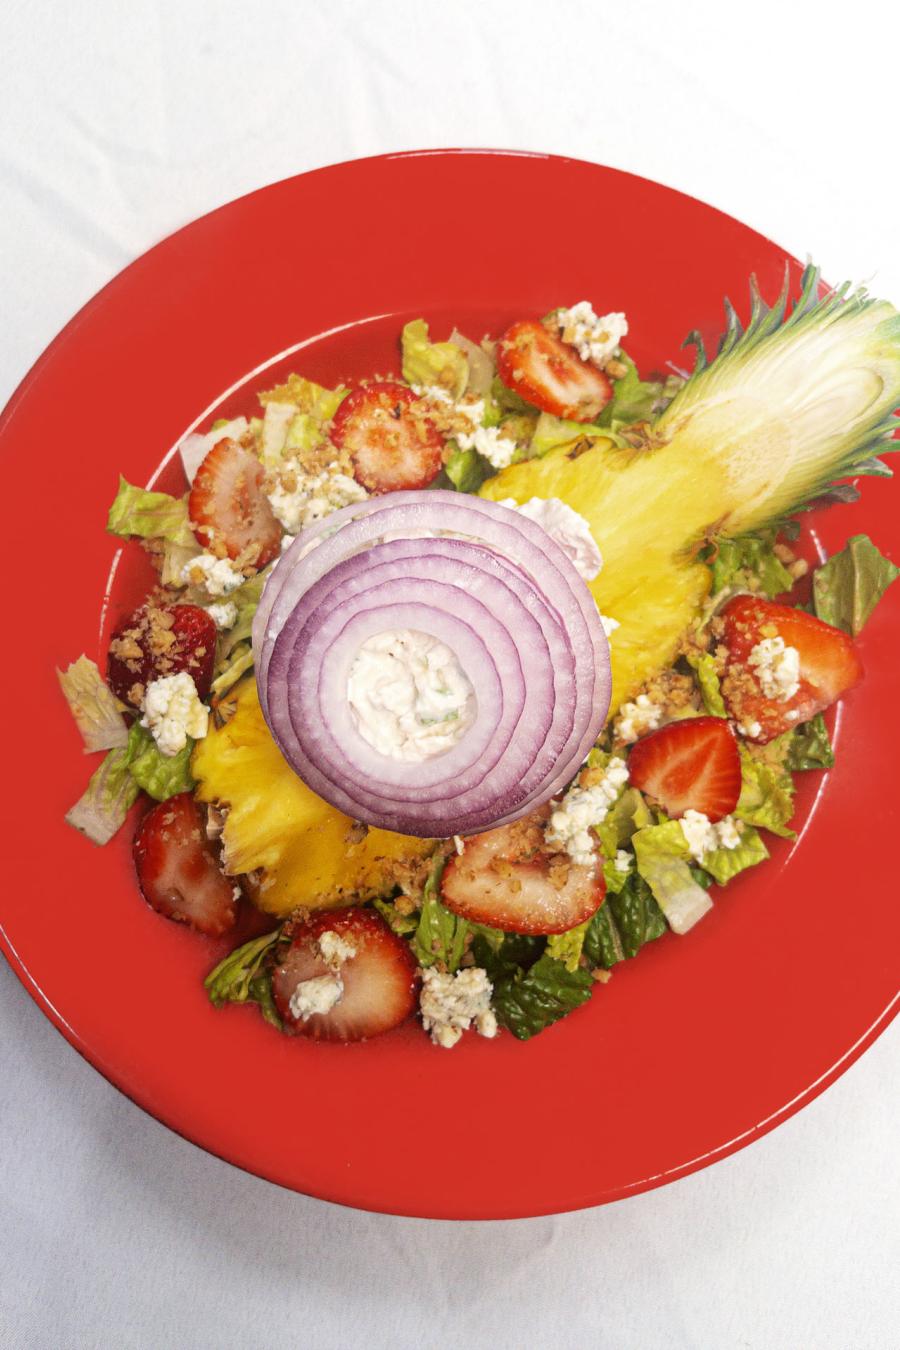 Marco’s Best Salads - Tropical Island Salad